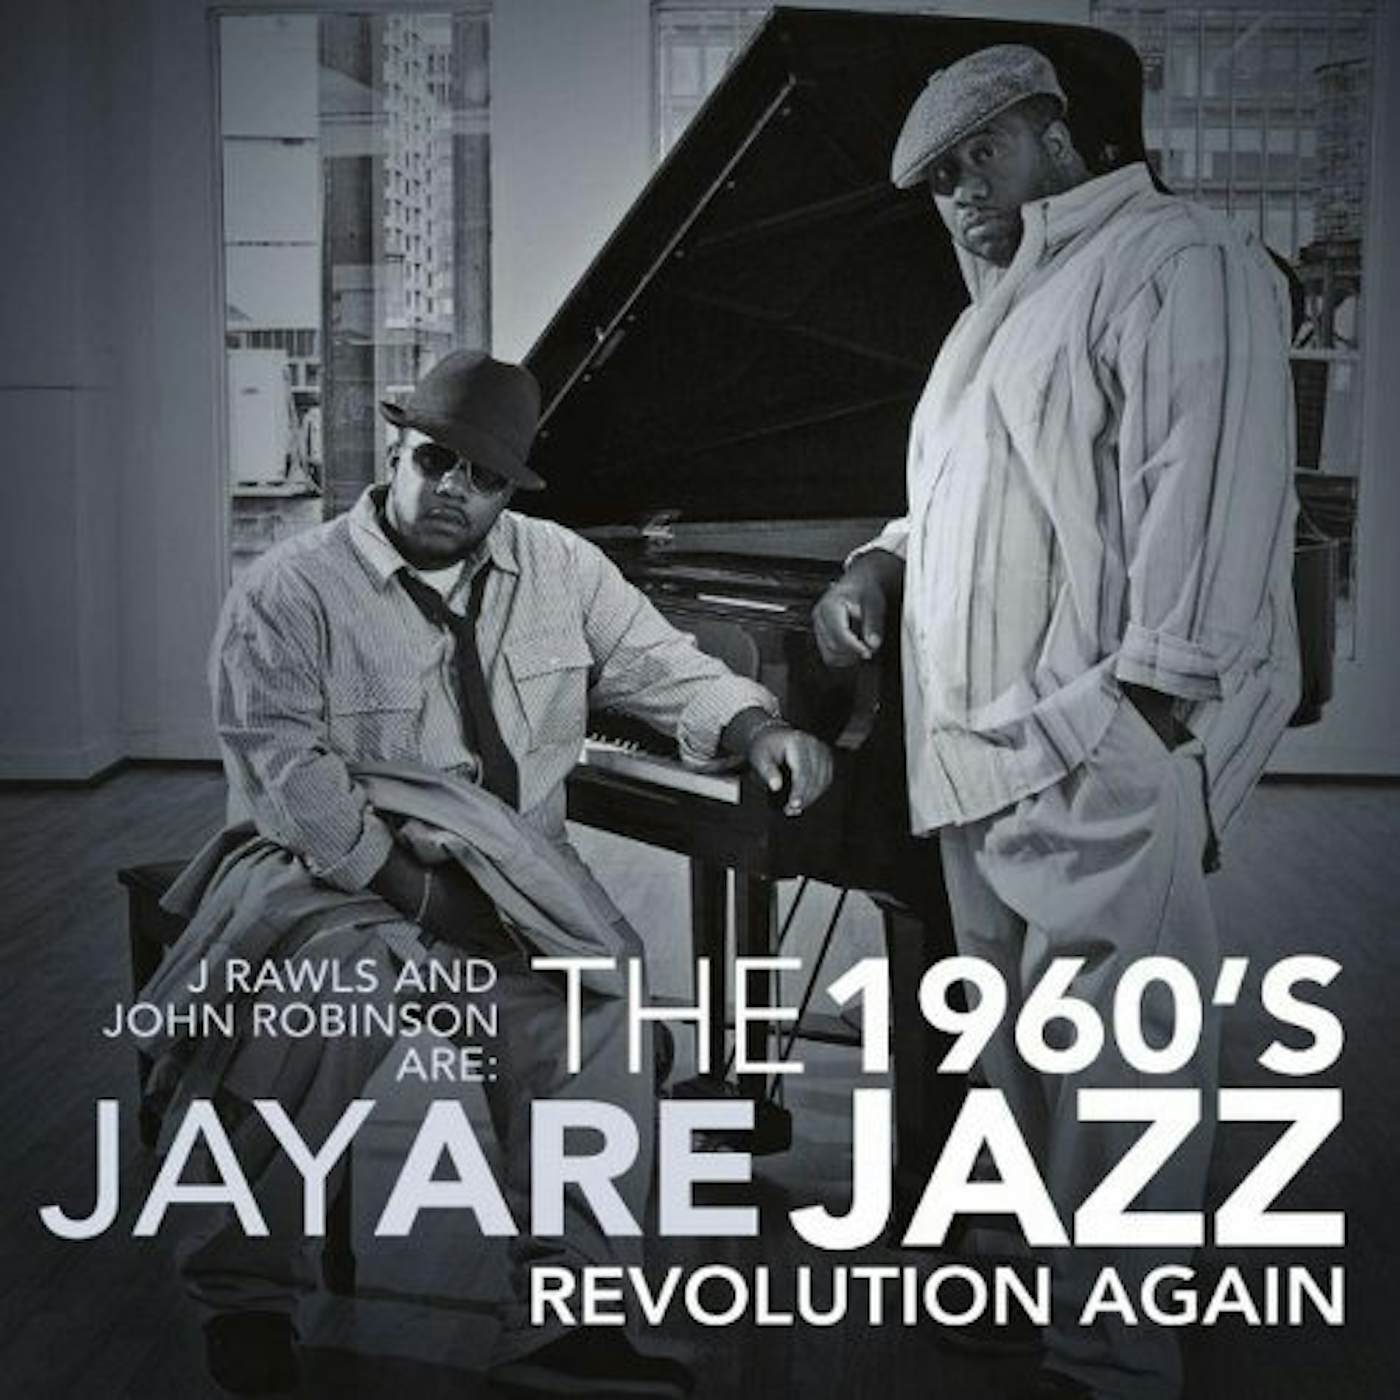 J. Rawls & John Robinson Are Jay Are 1960S JAZZ REVOLUTION AGAIN (UK) (Vinyl)